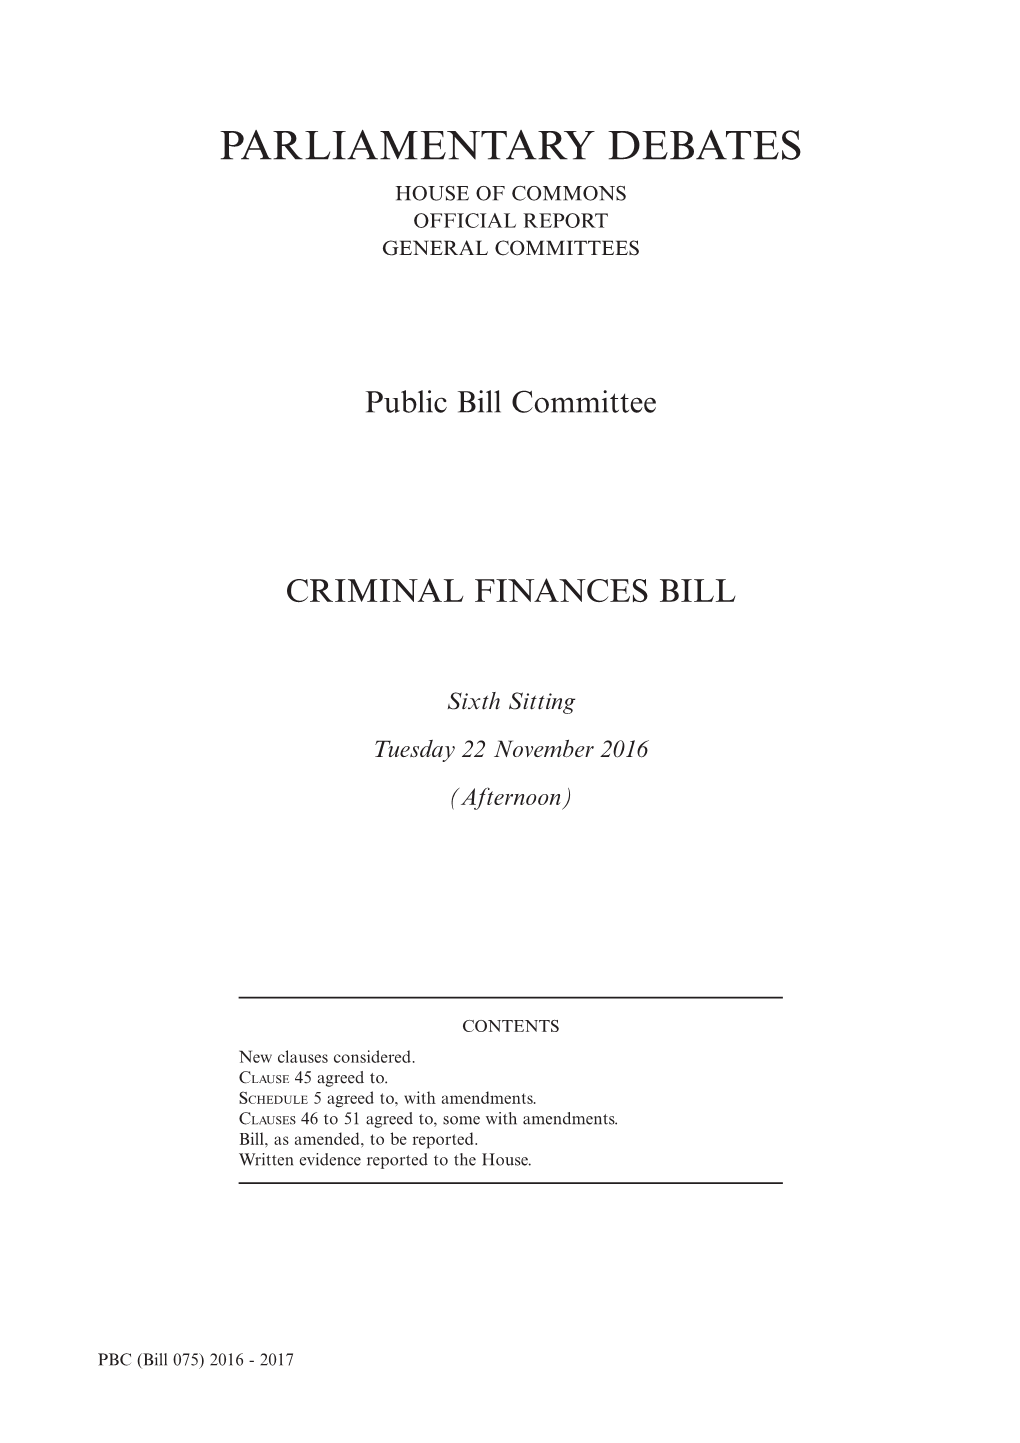 Criminal Finances Bill